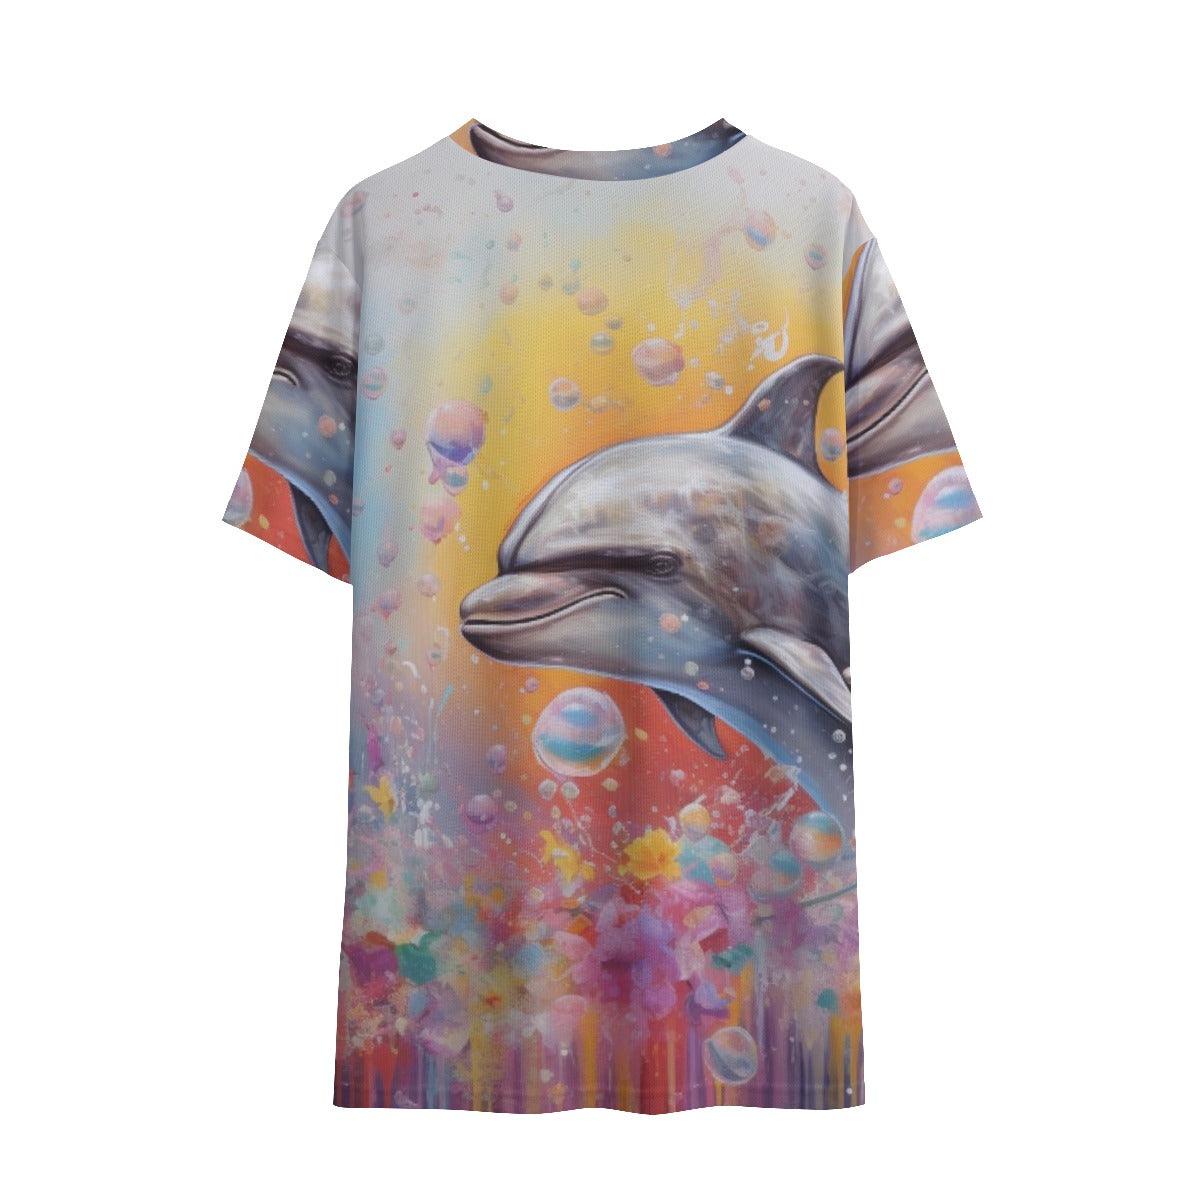 Dolphin Dream - Girls' V-Neck T-Shirt by D'Sare - D'Sare 